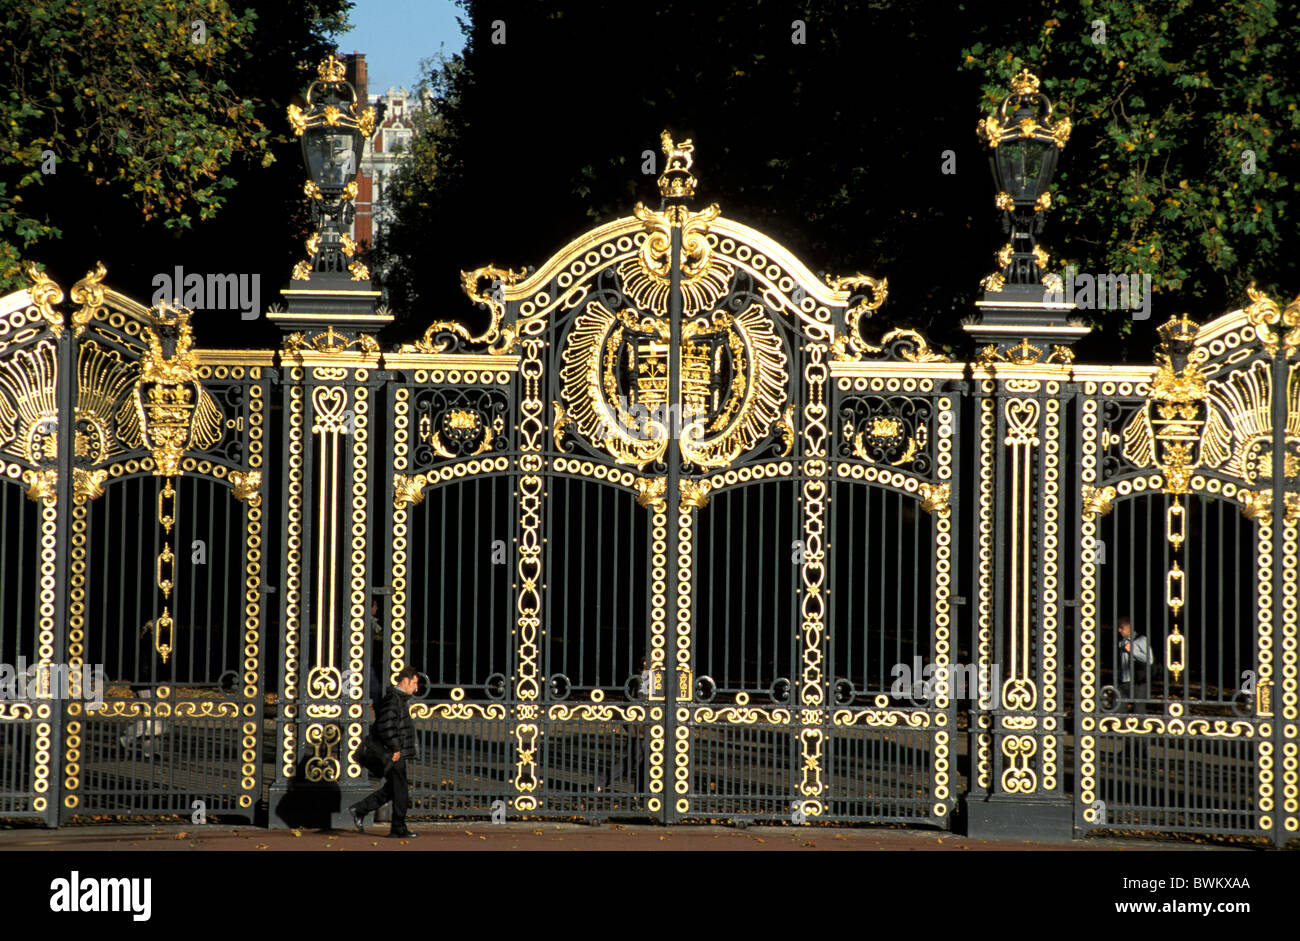 UK London Buckingham Palace Green Park Gates Gate Great Britain Europe England fence gold golden crest ro Stock Photo